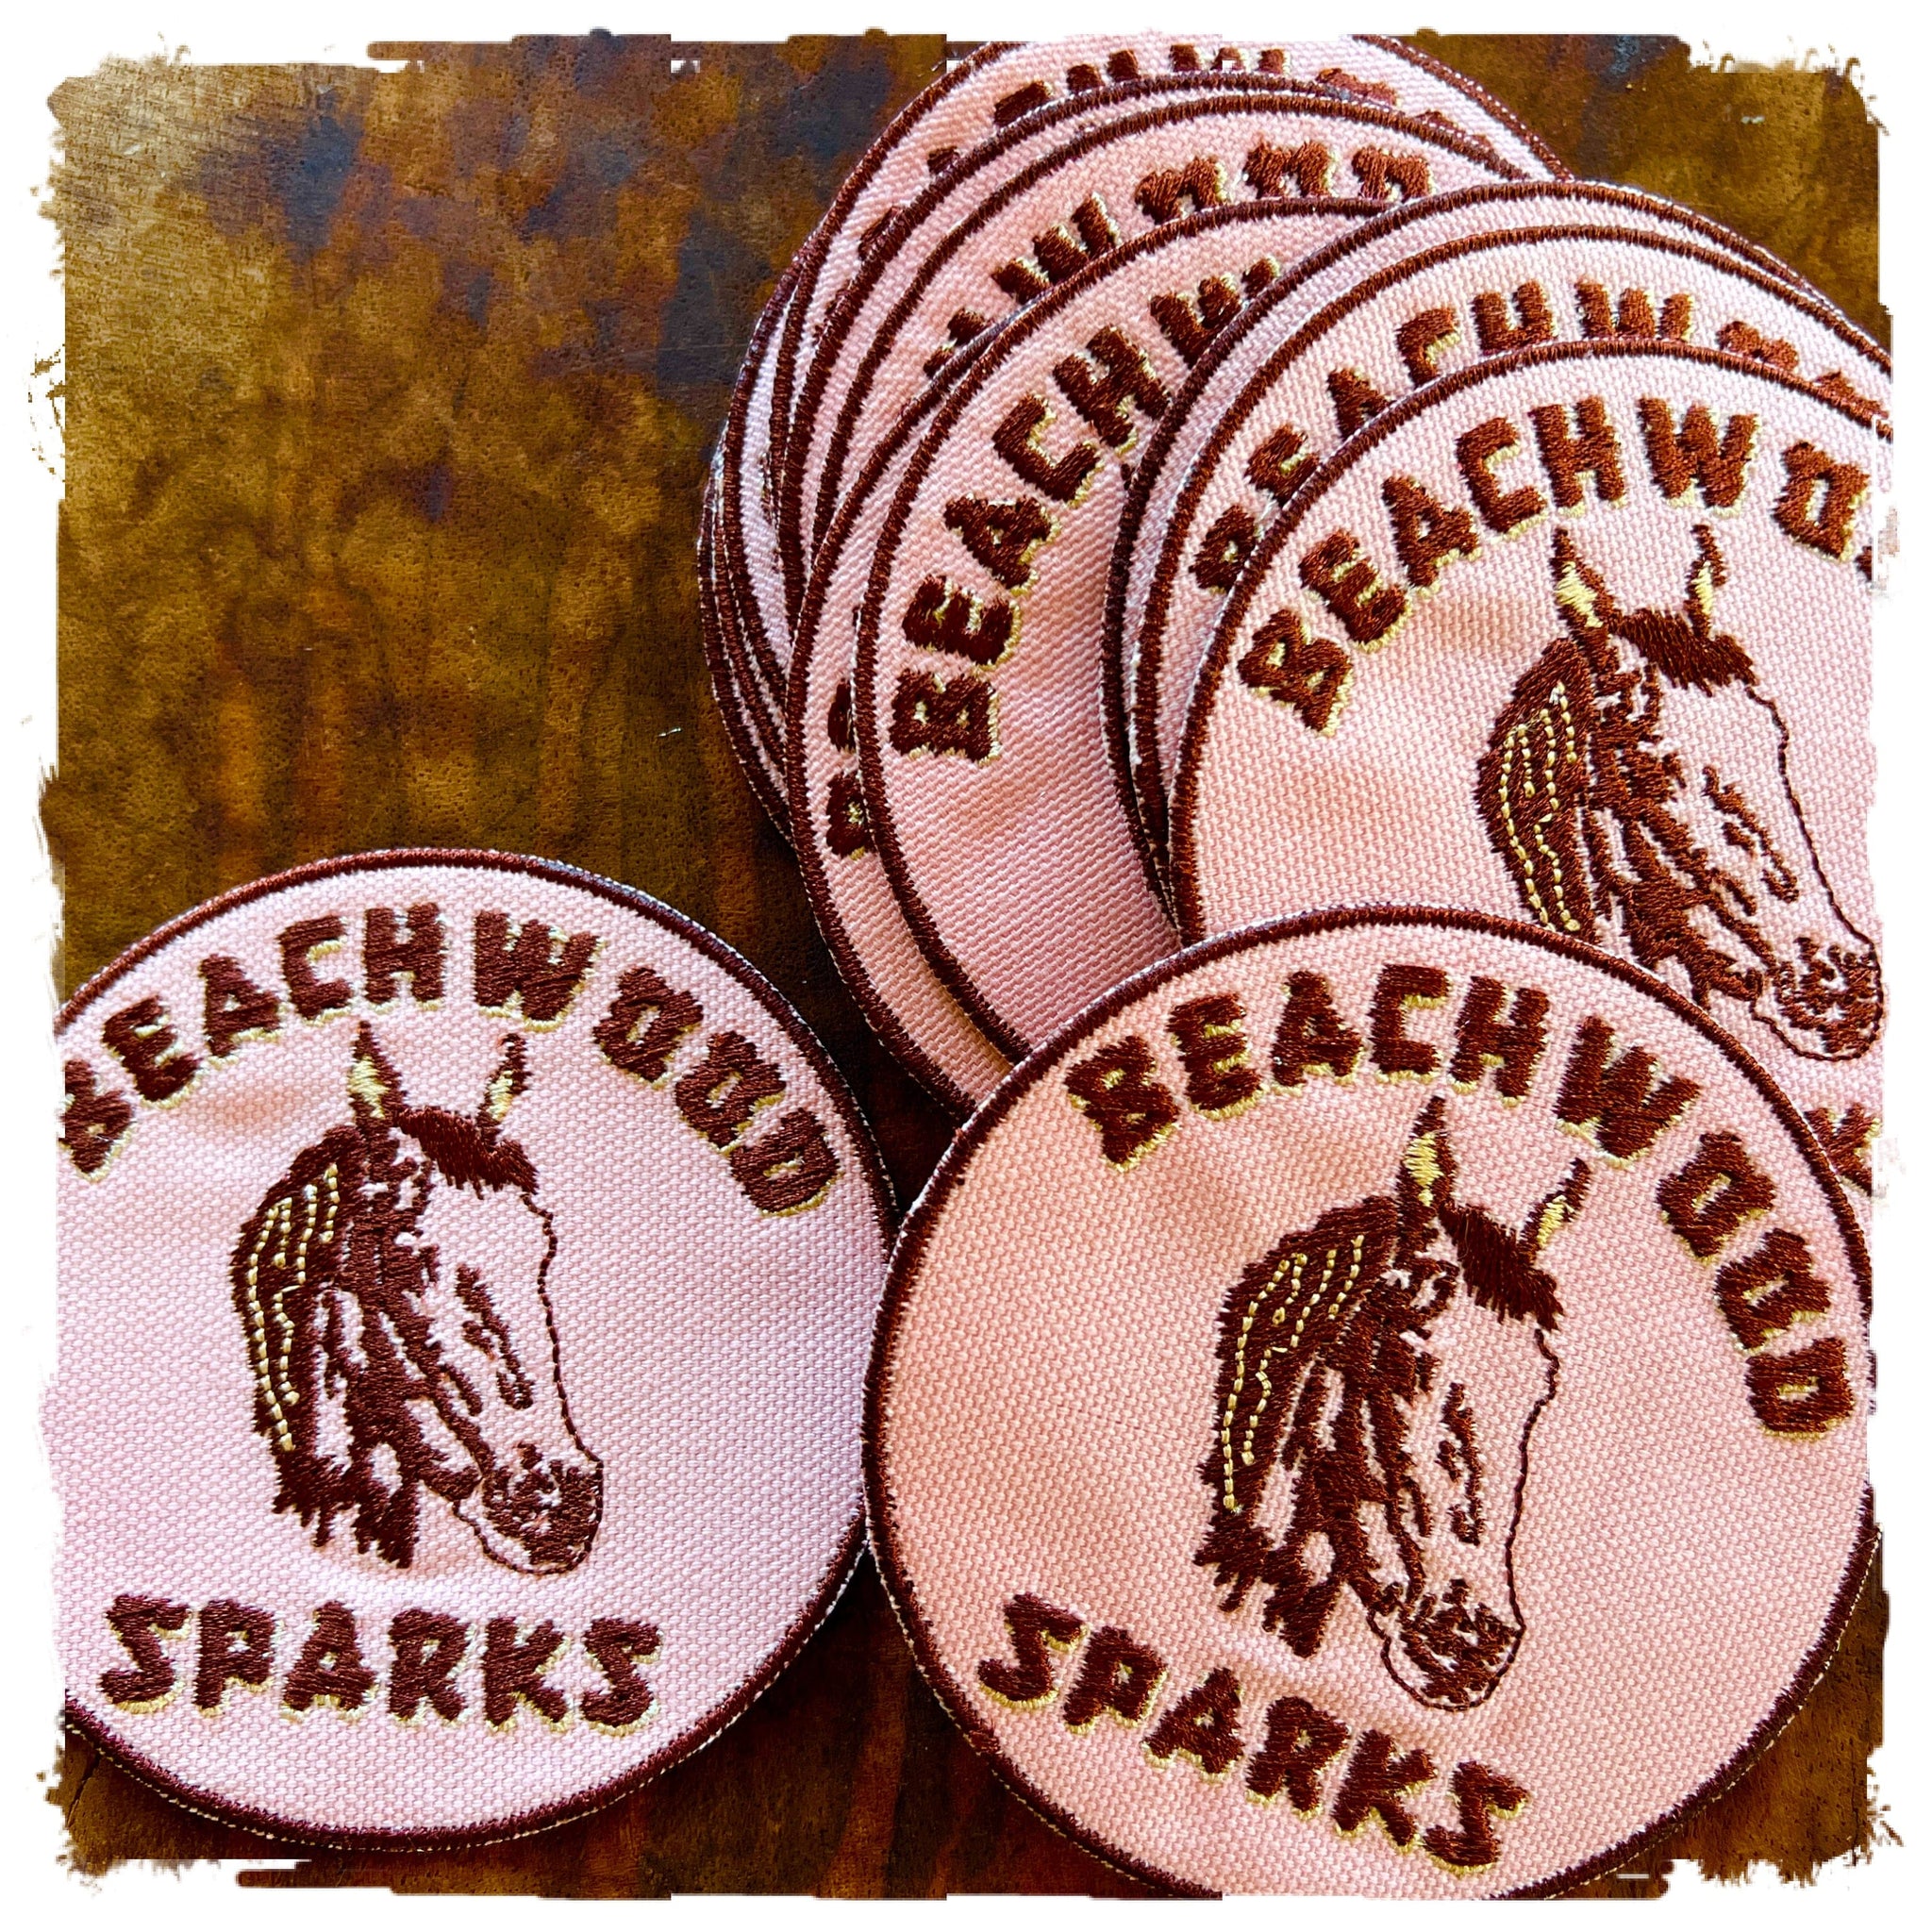 Beachwood Sparks Logo Patch (7068081487954)